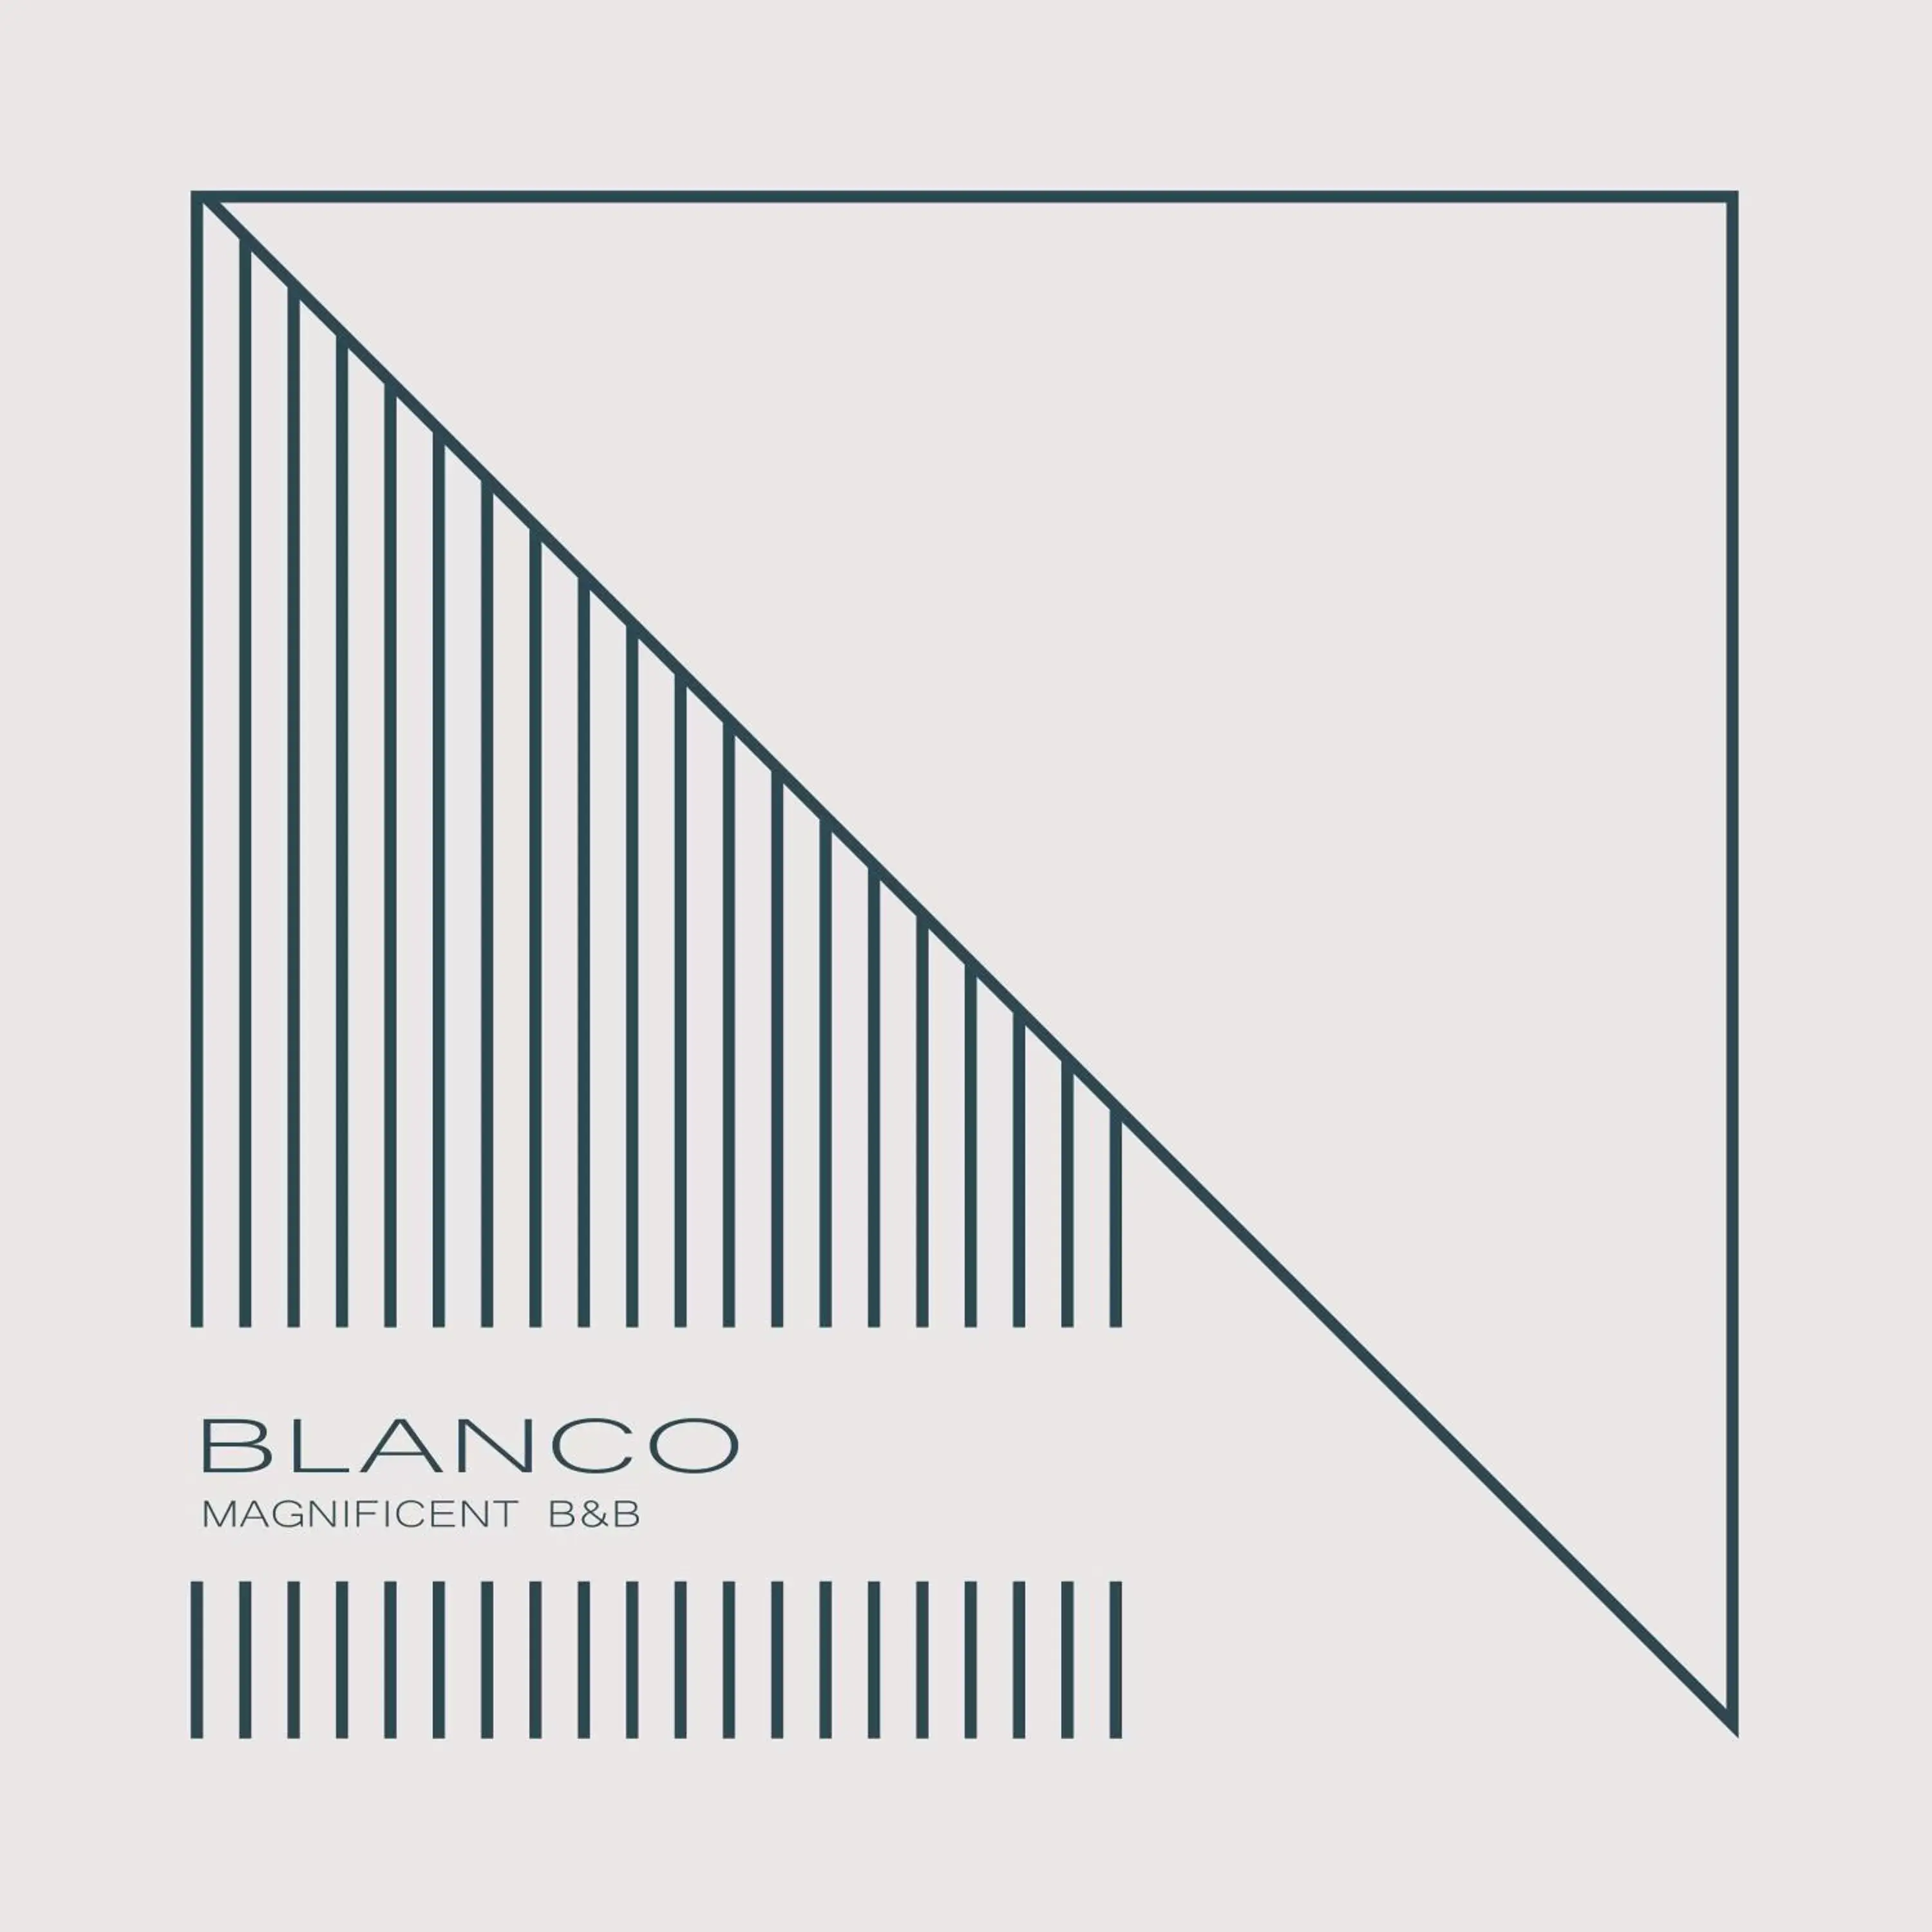 Property logo or sign, Floor Plan in Blanco - MAGNIFICENT B&B Altamura